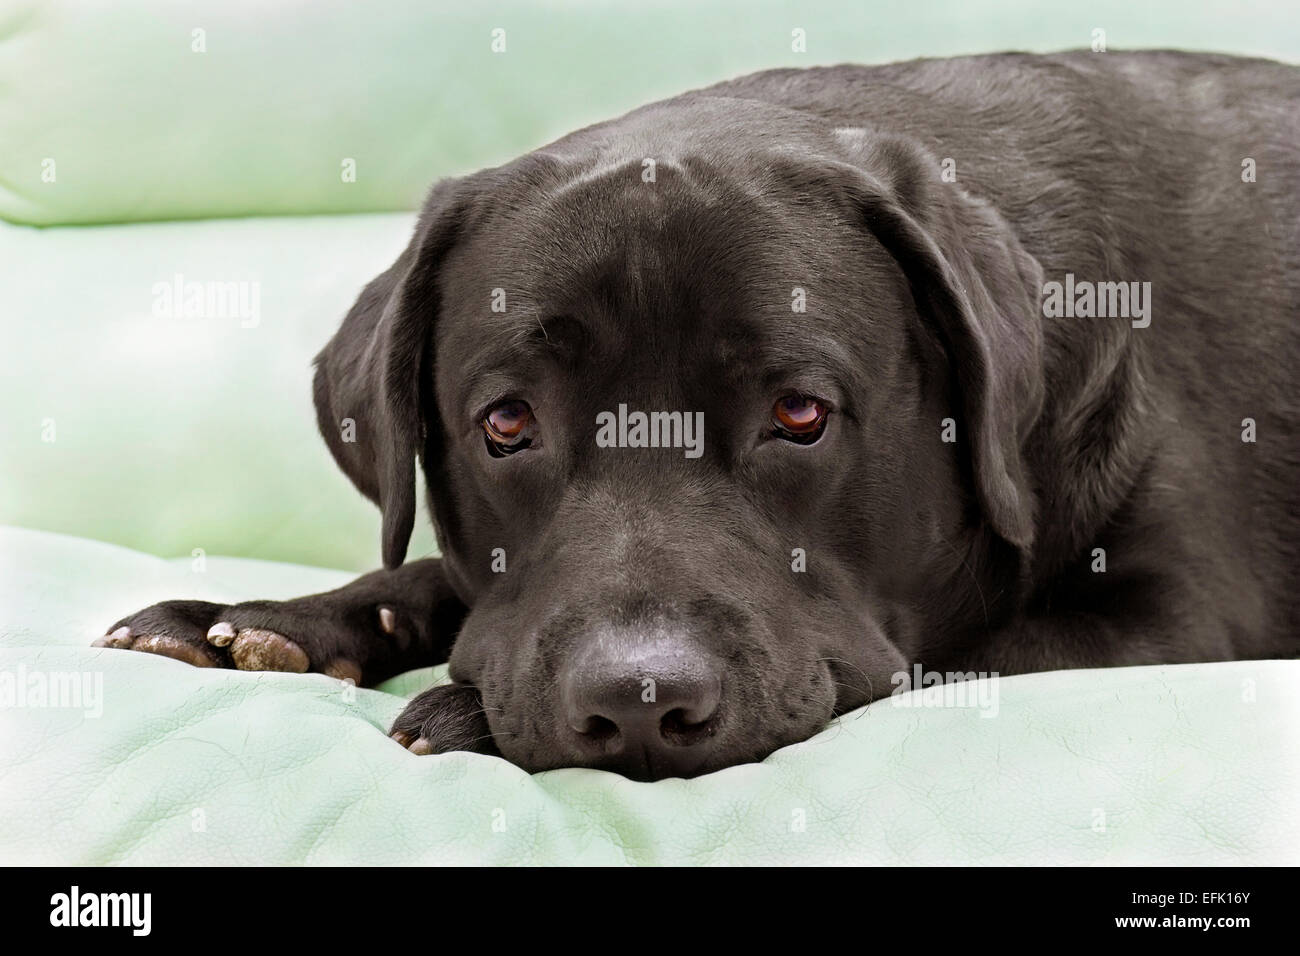 image dog breed black labrador close up Stock Photo